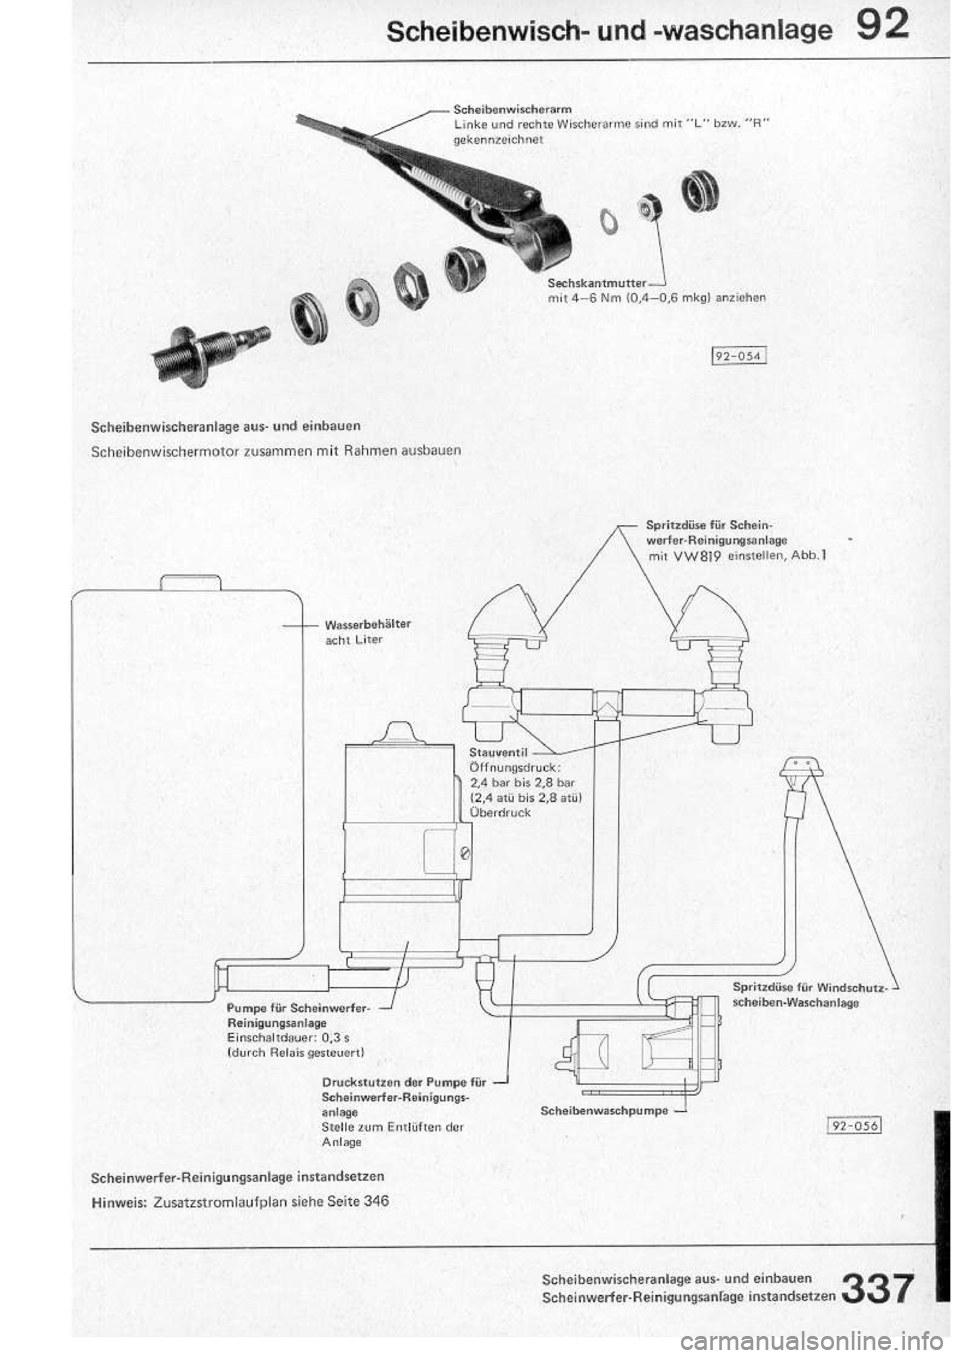 VOLKSWAGEN T2 1975  Repair Manual 
http://vwbus.dyndns.org/bulli/michaelk/vw_bus_d/rlf/10/337.jpg 